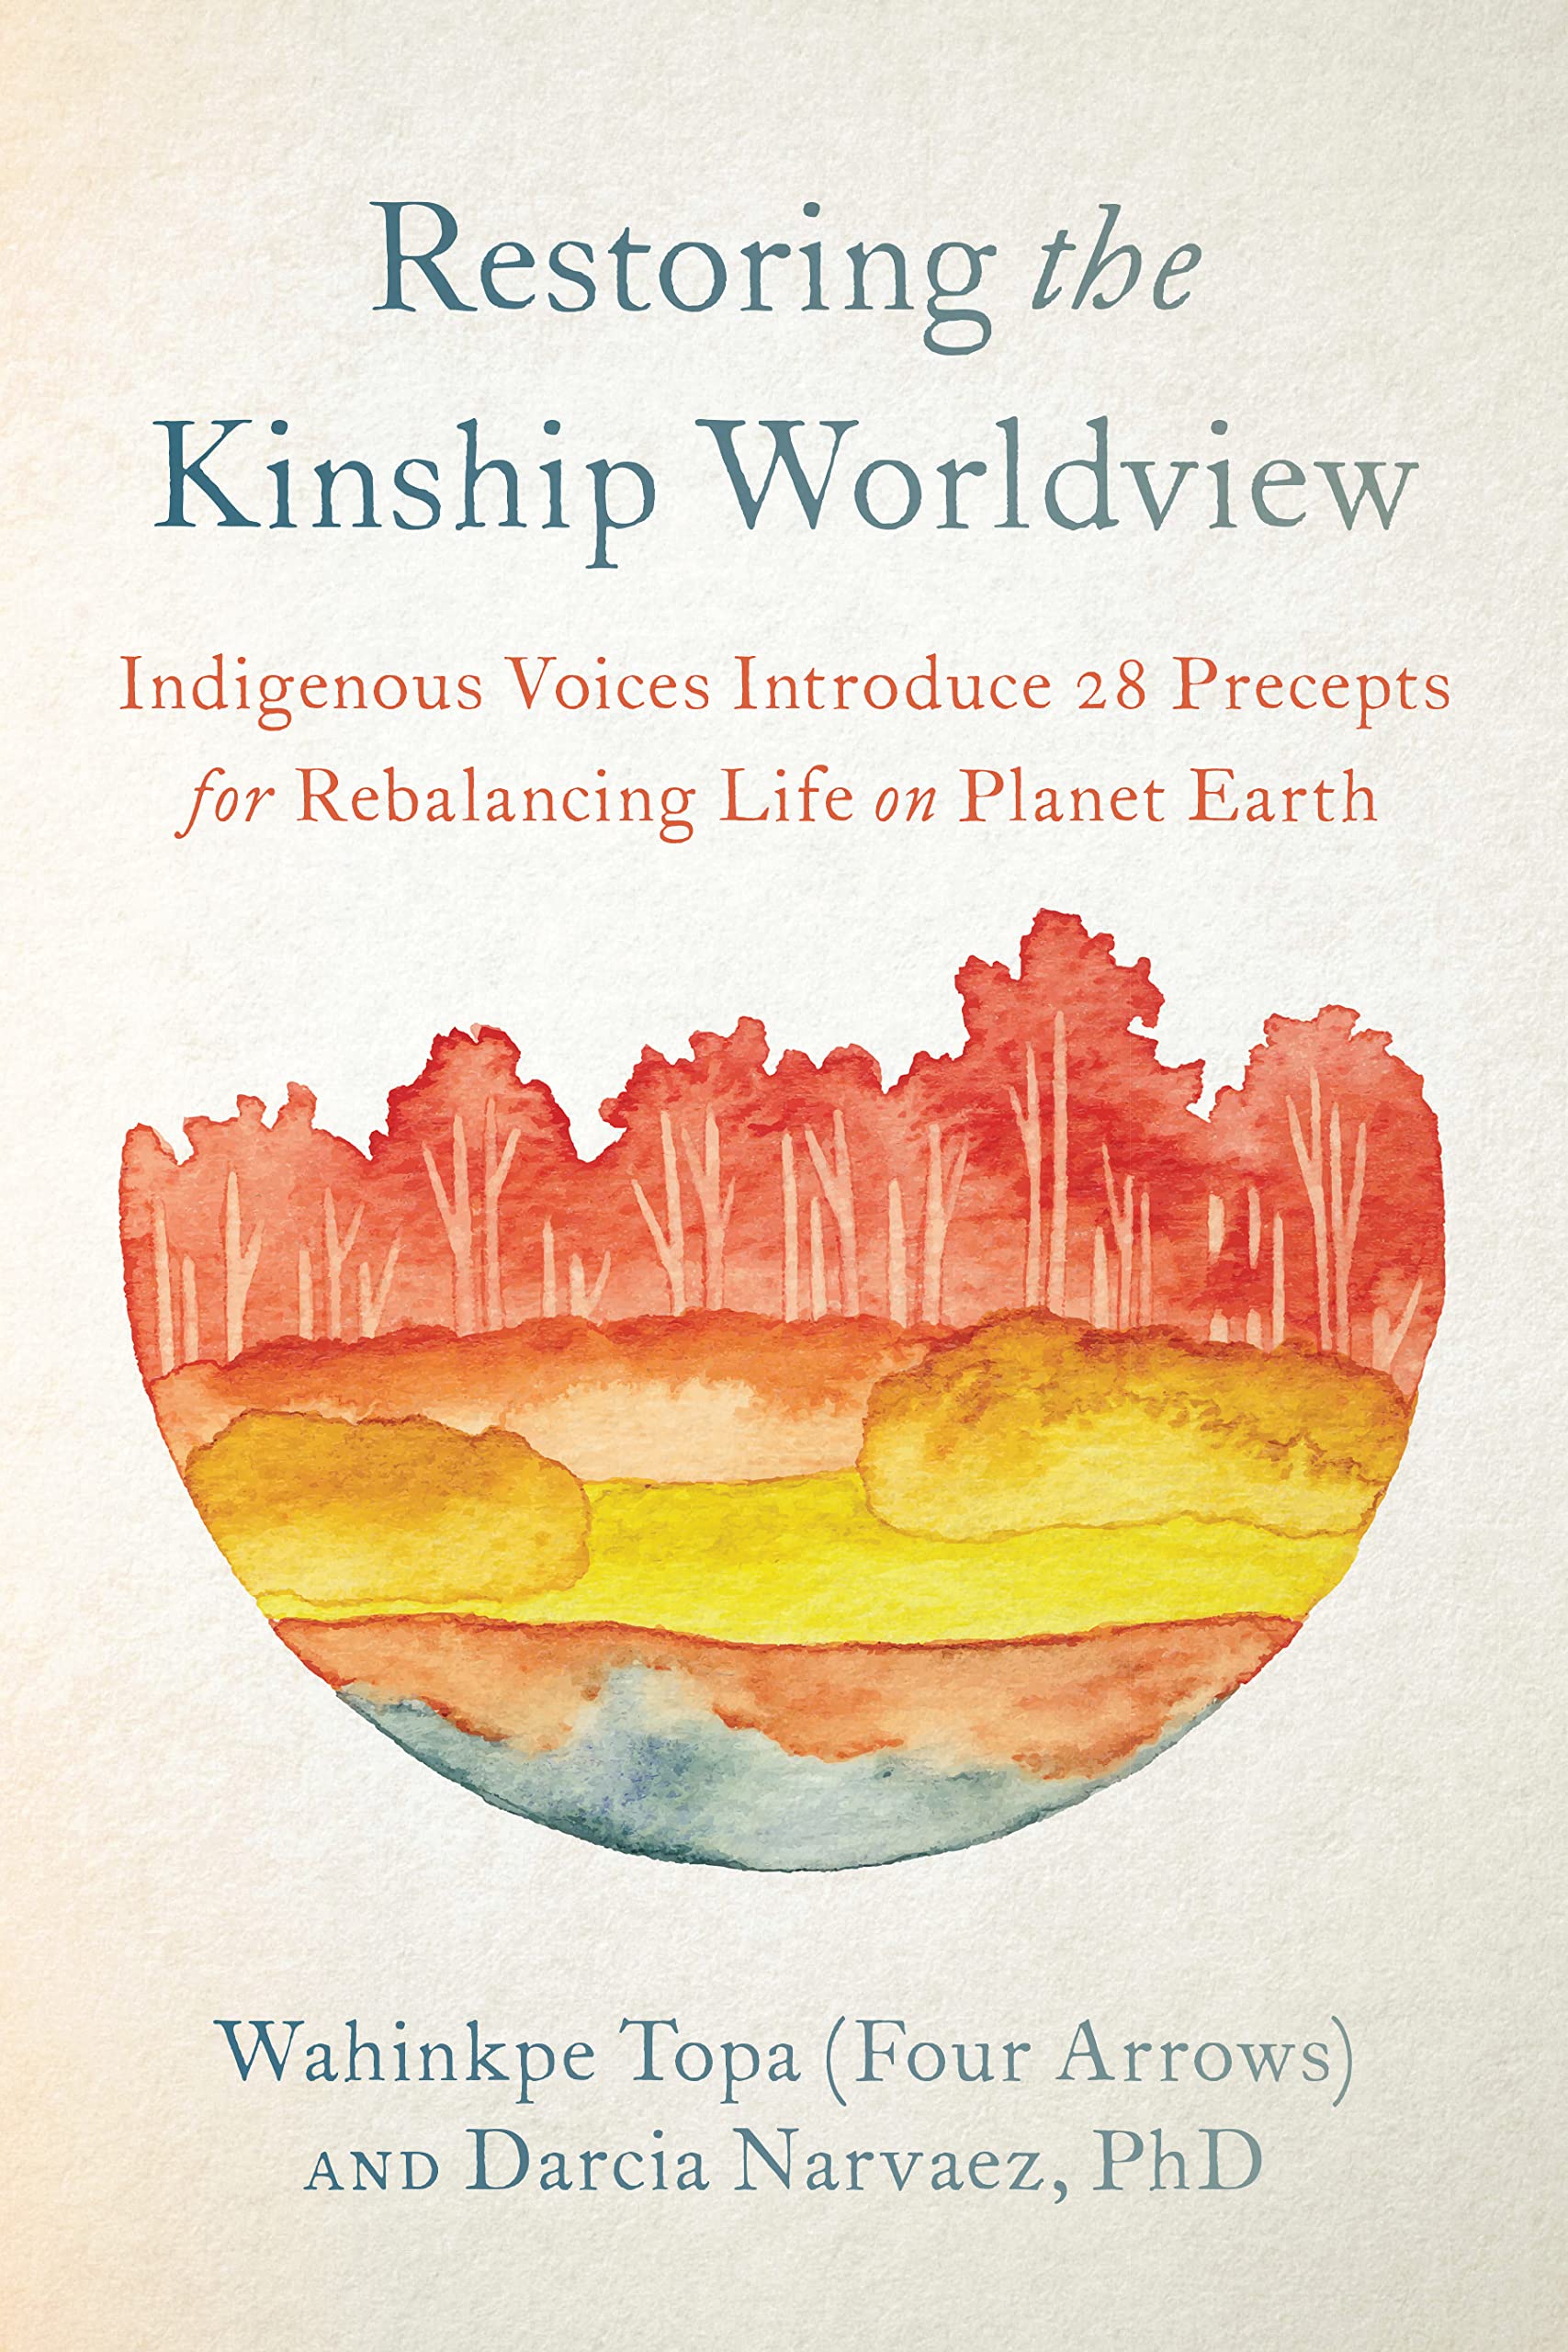 Wahinkpe Topa (Four Arrows), Darcia Narvaez: Restoring the Kinship Worldview (2022, North Atlantic Books)